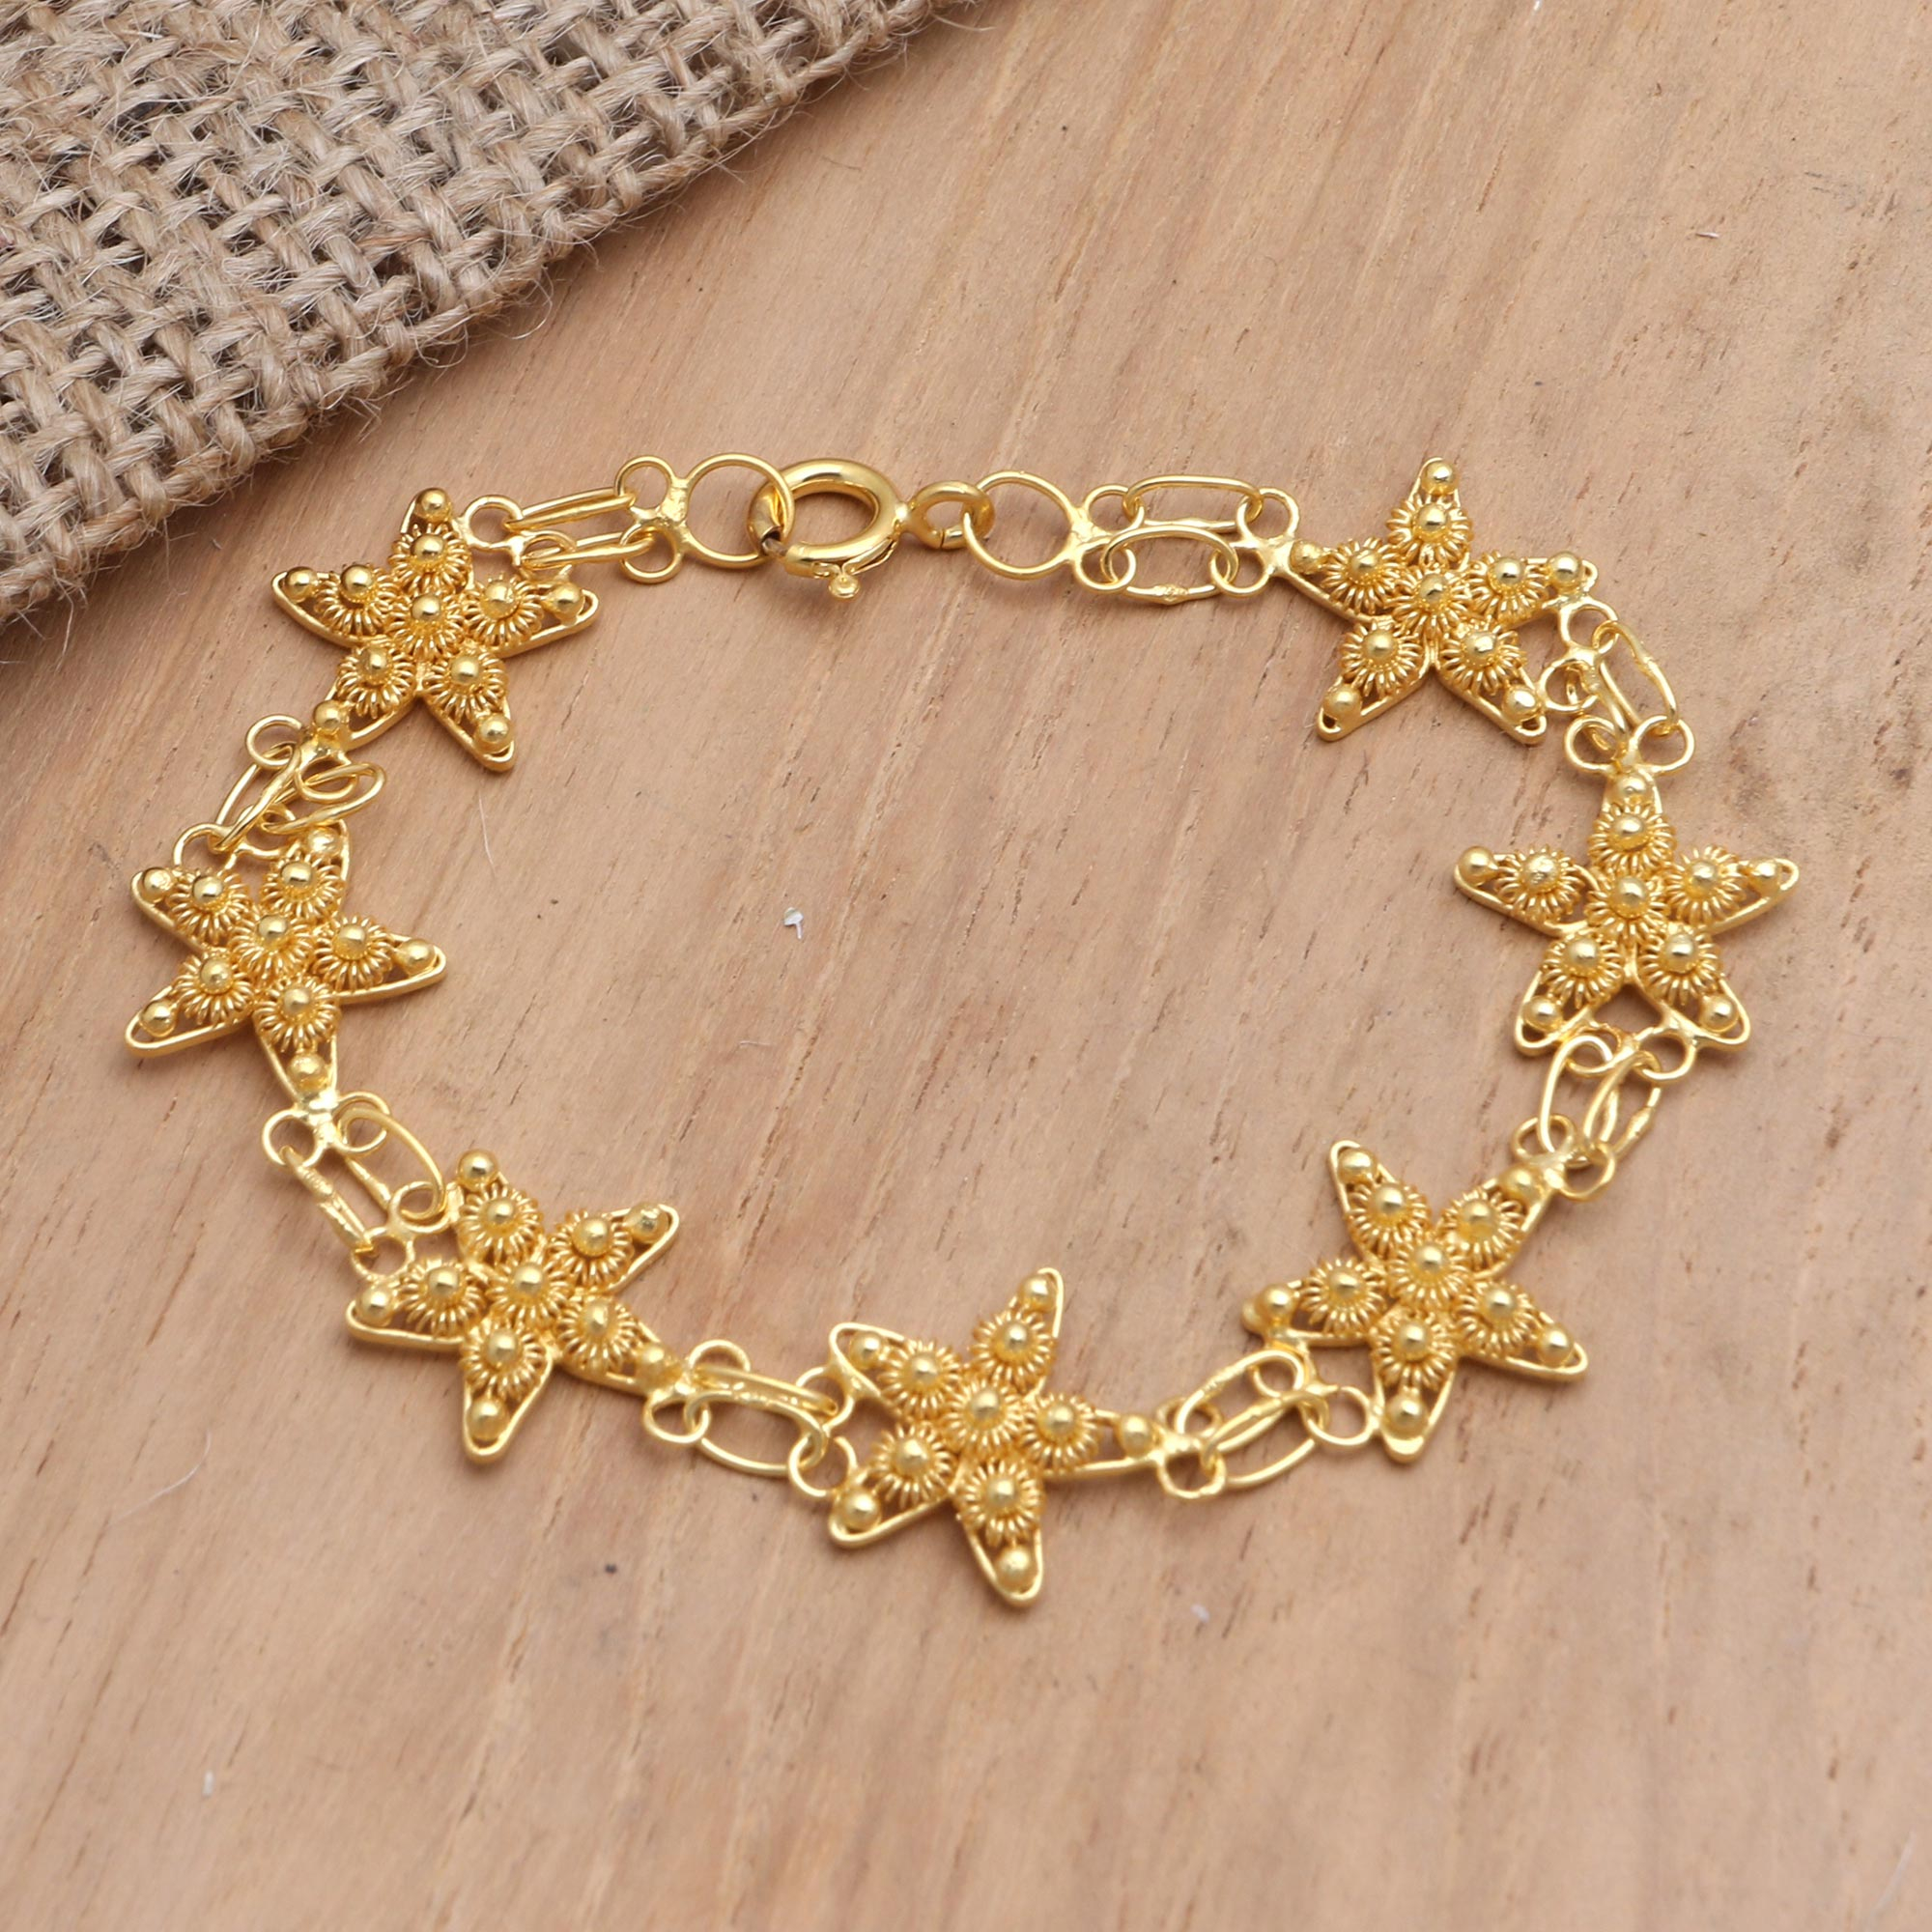 Gold-Plated Filigree Star-Motif Bracelet - Wish Upon